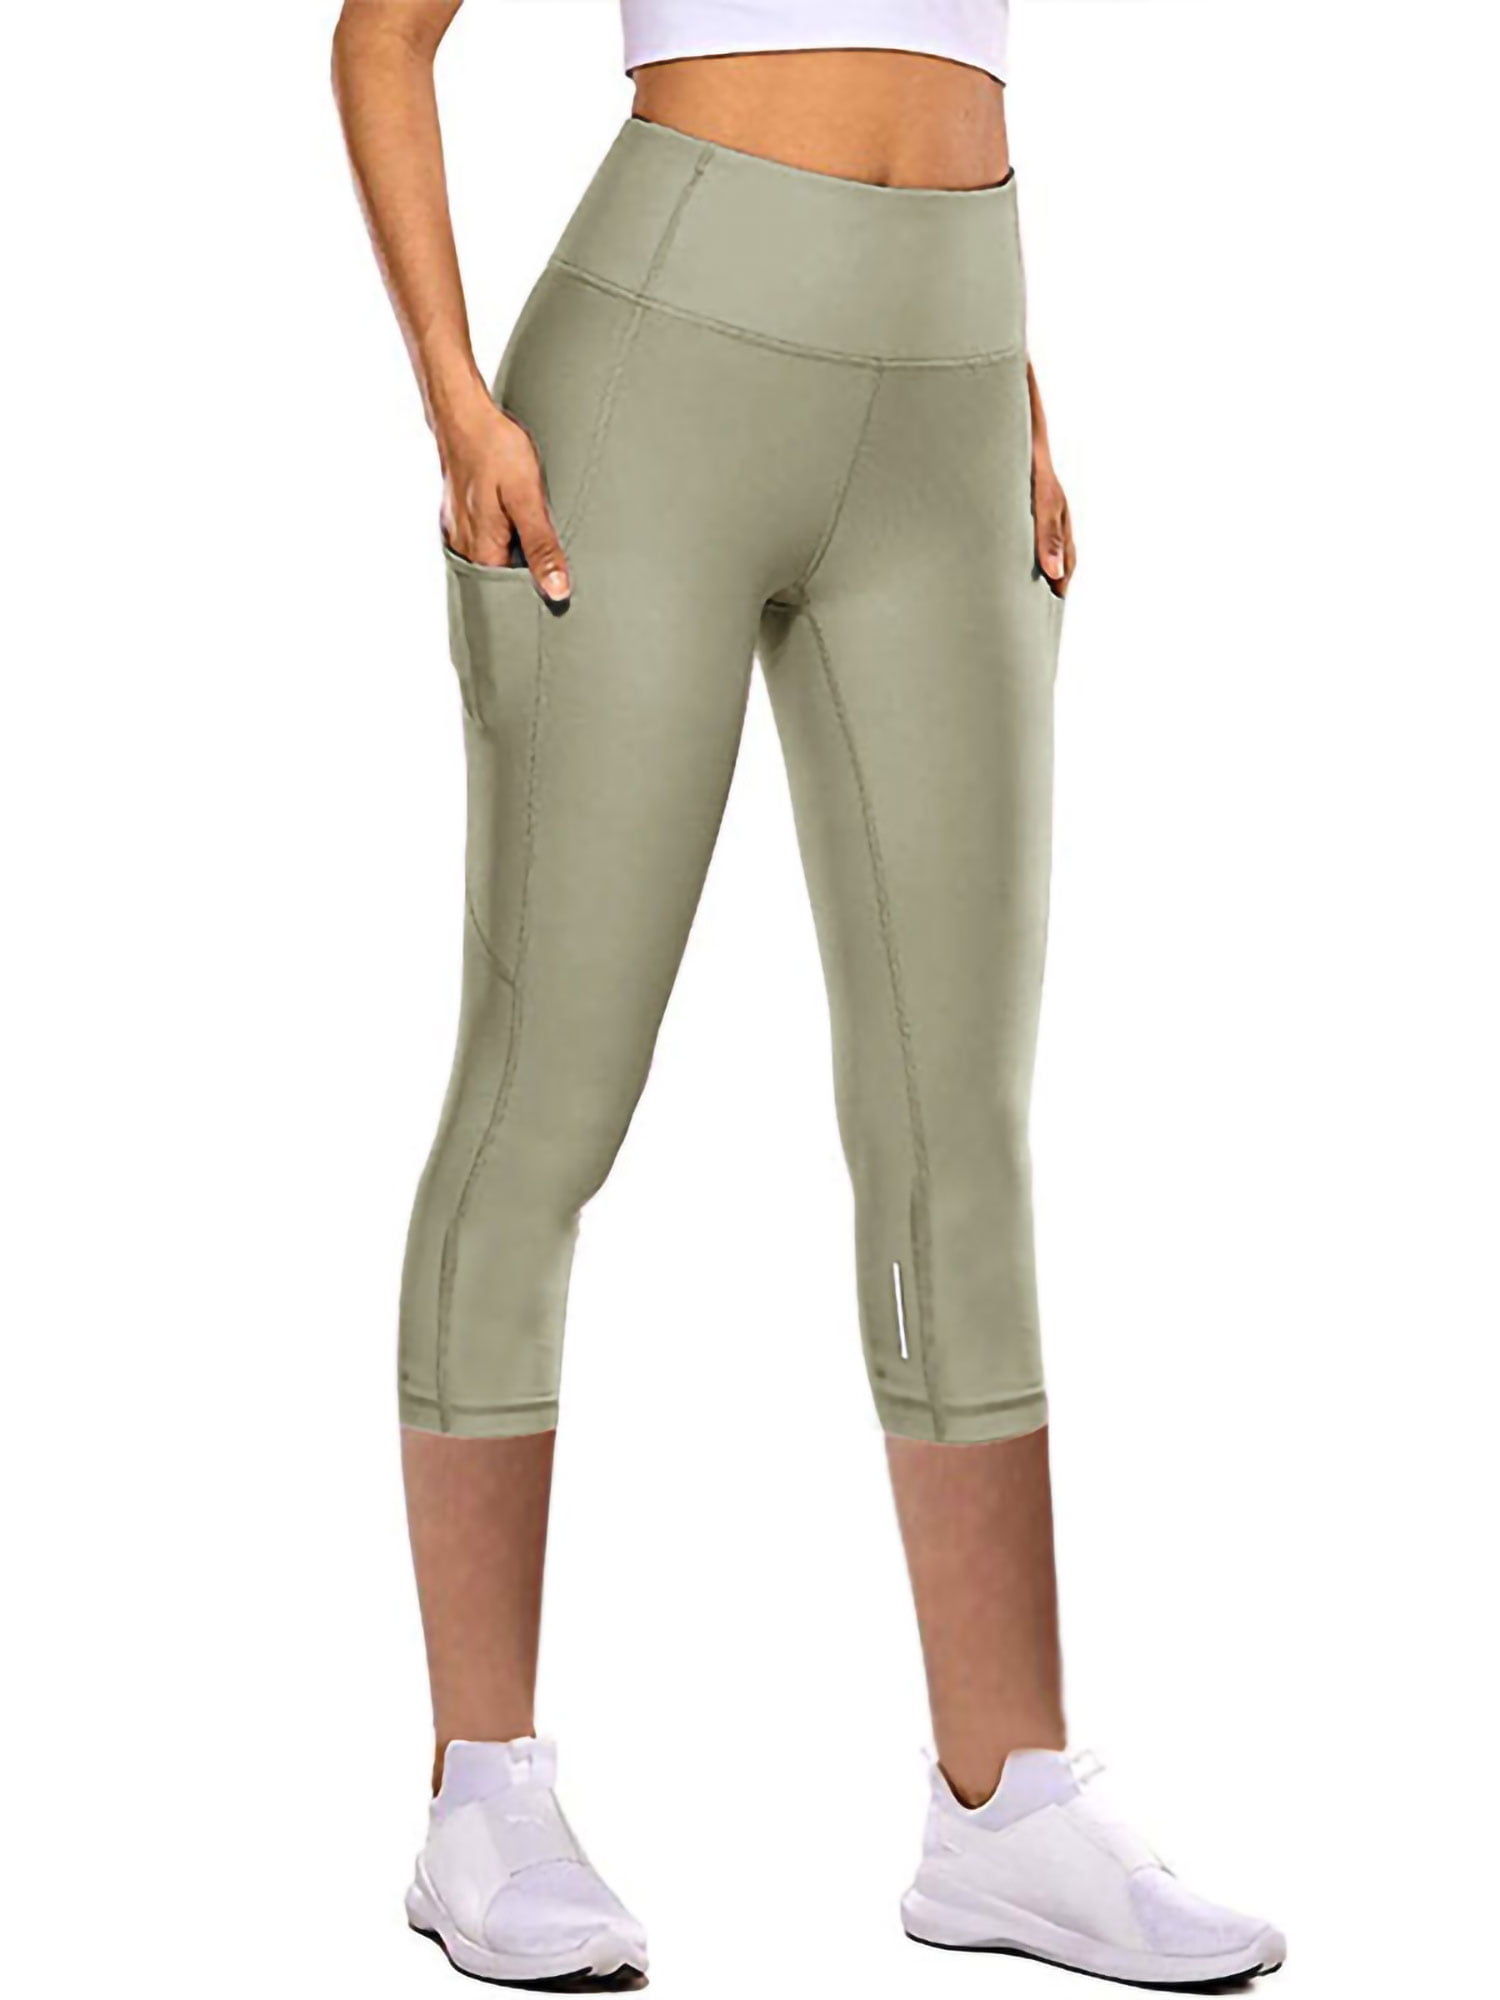 Niuer Capri 3/4 Yoga Pants for Women Sides Pockets High Waist